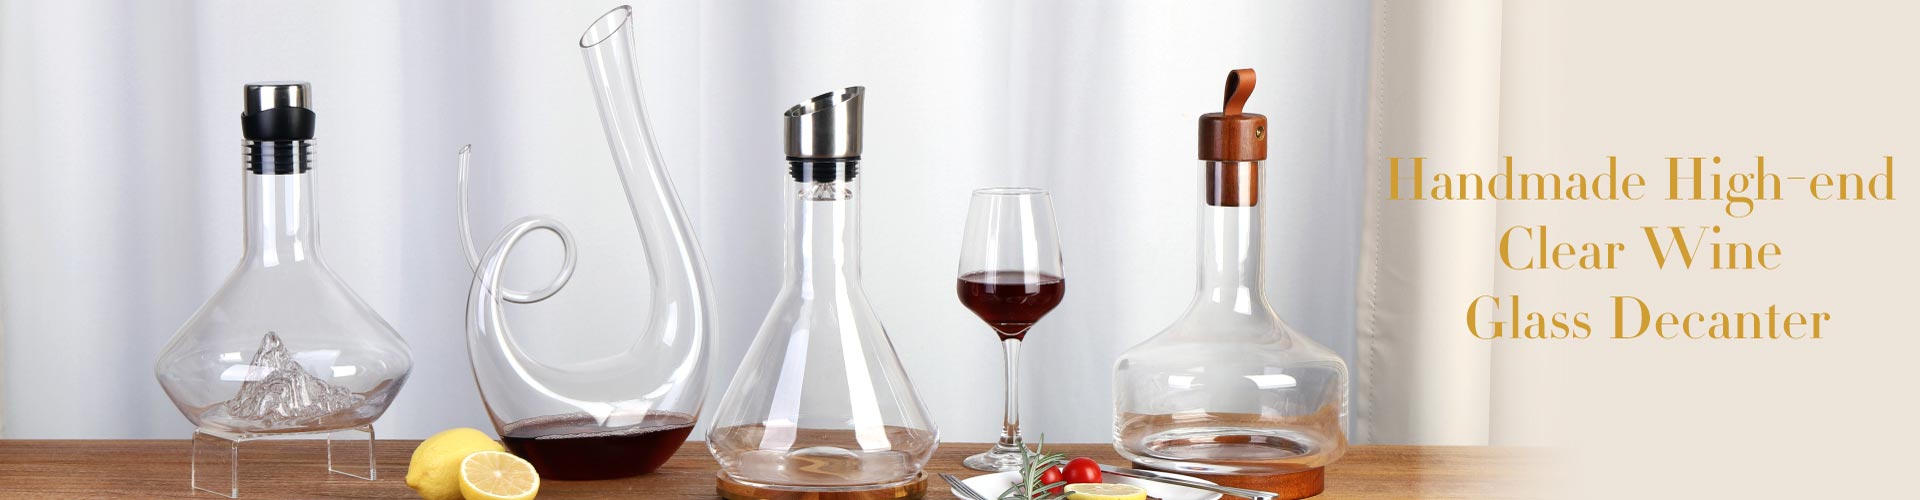 handmade wine glass decanter